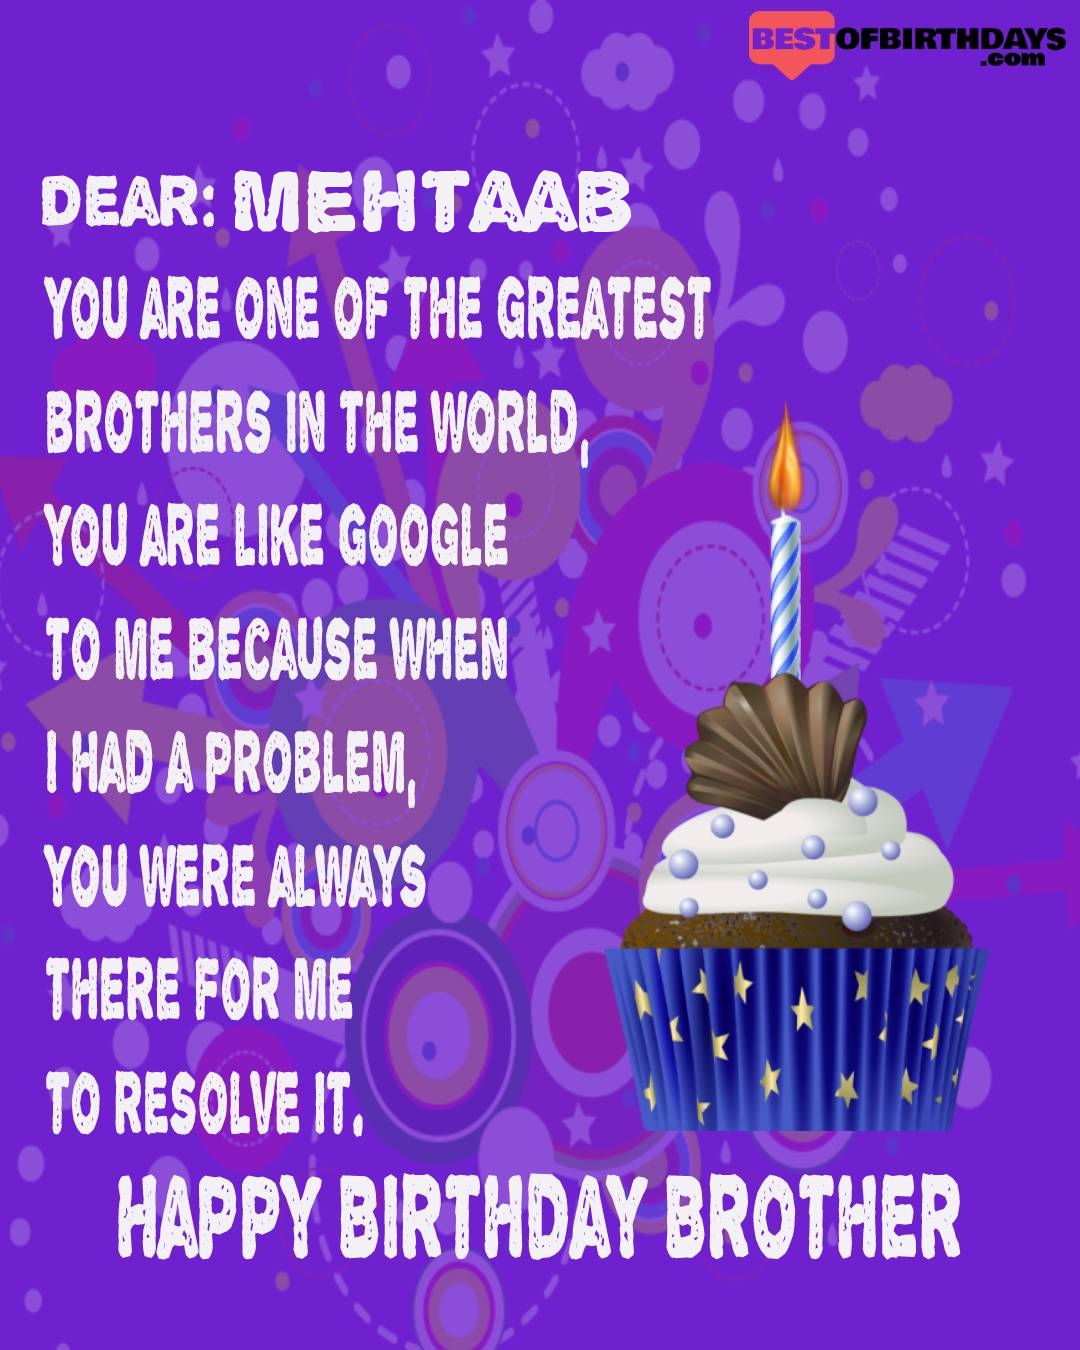 Happy birthday mehtaab bhai brother bro